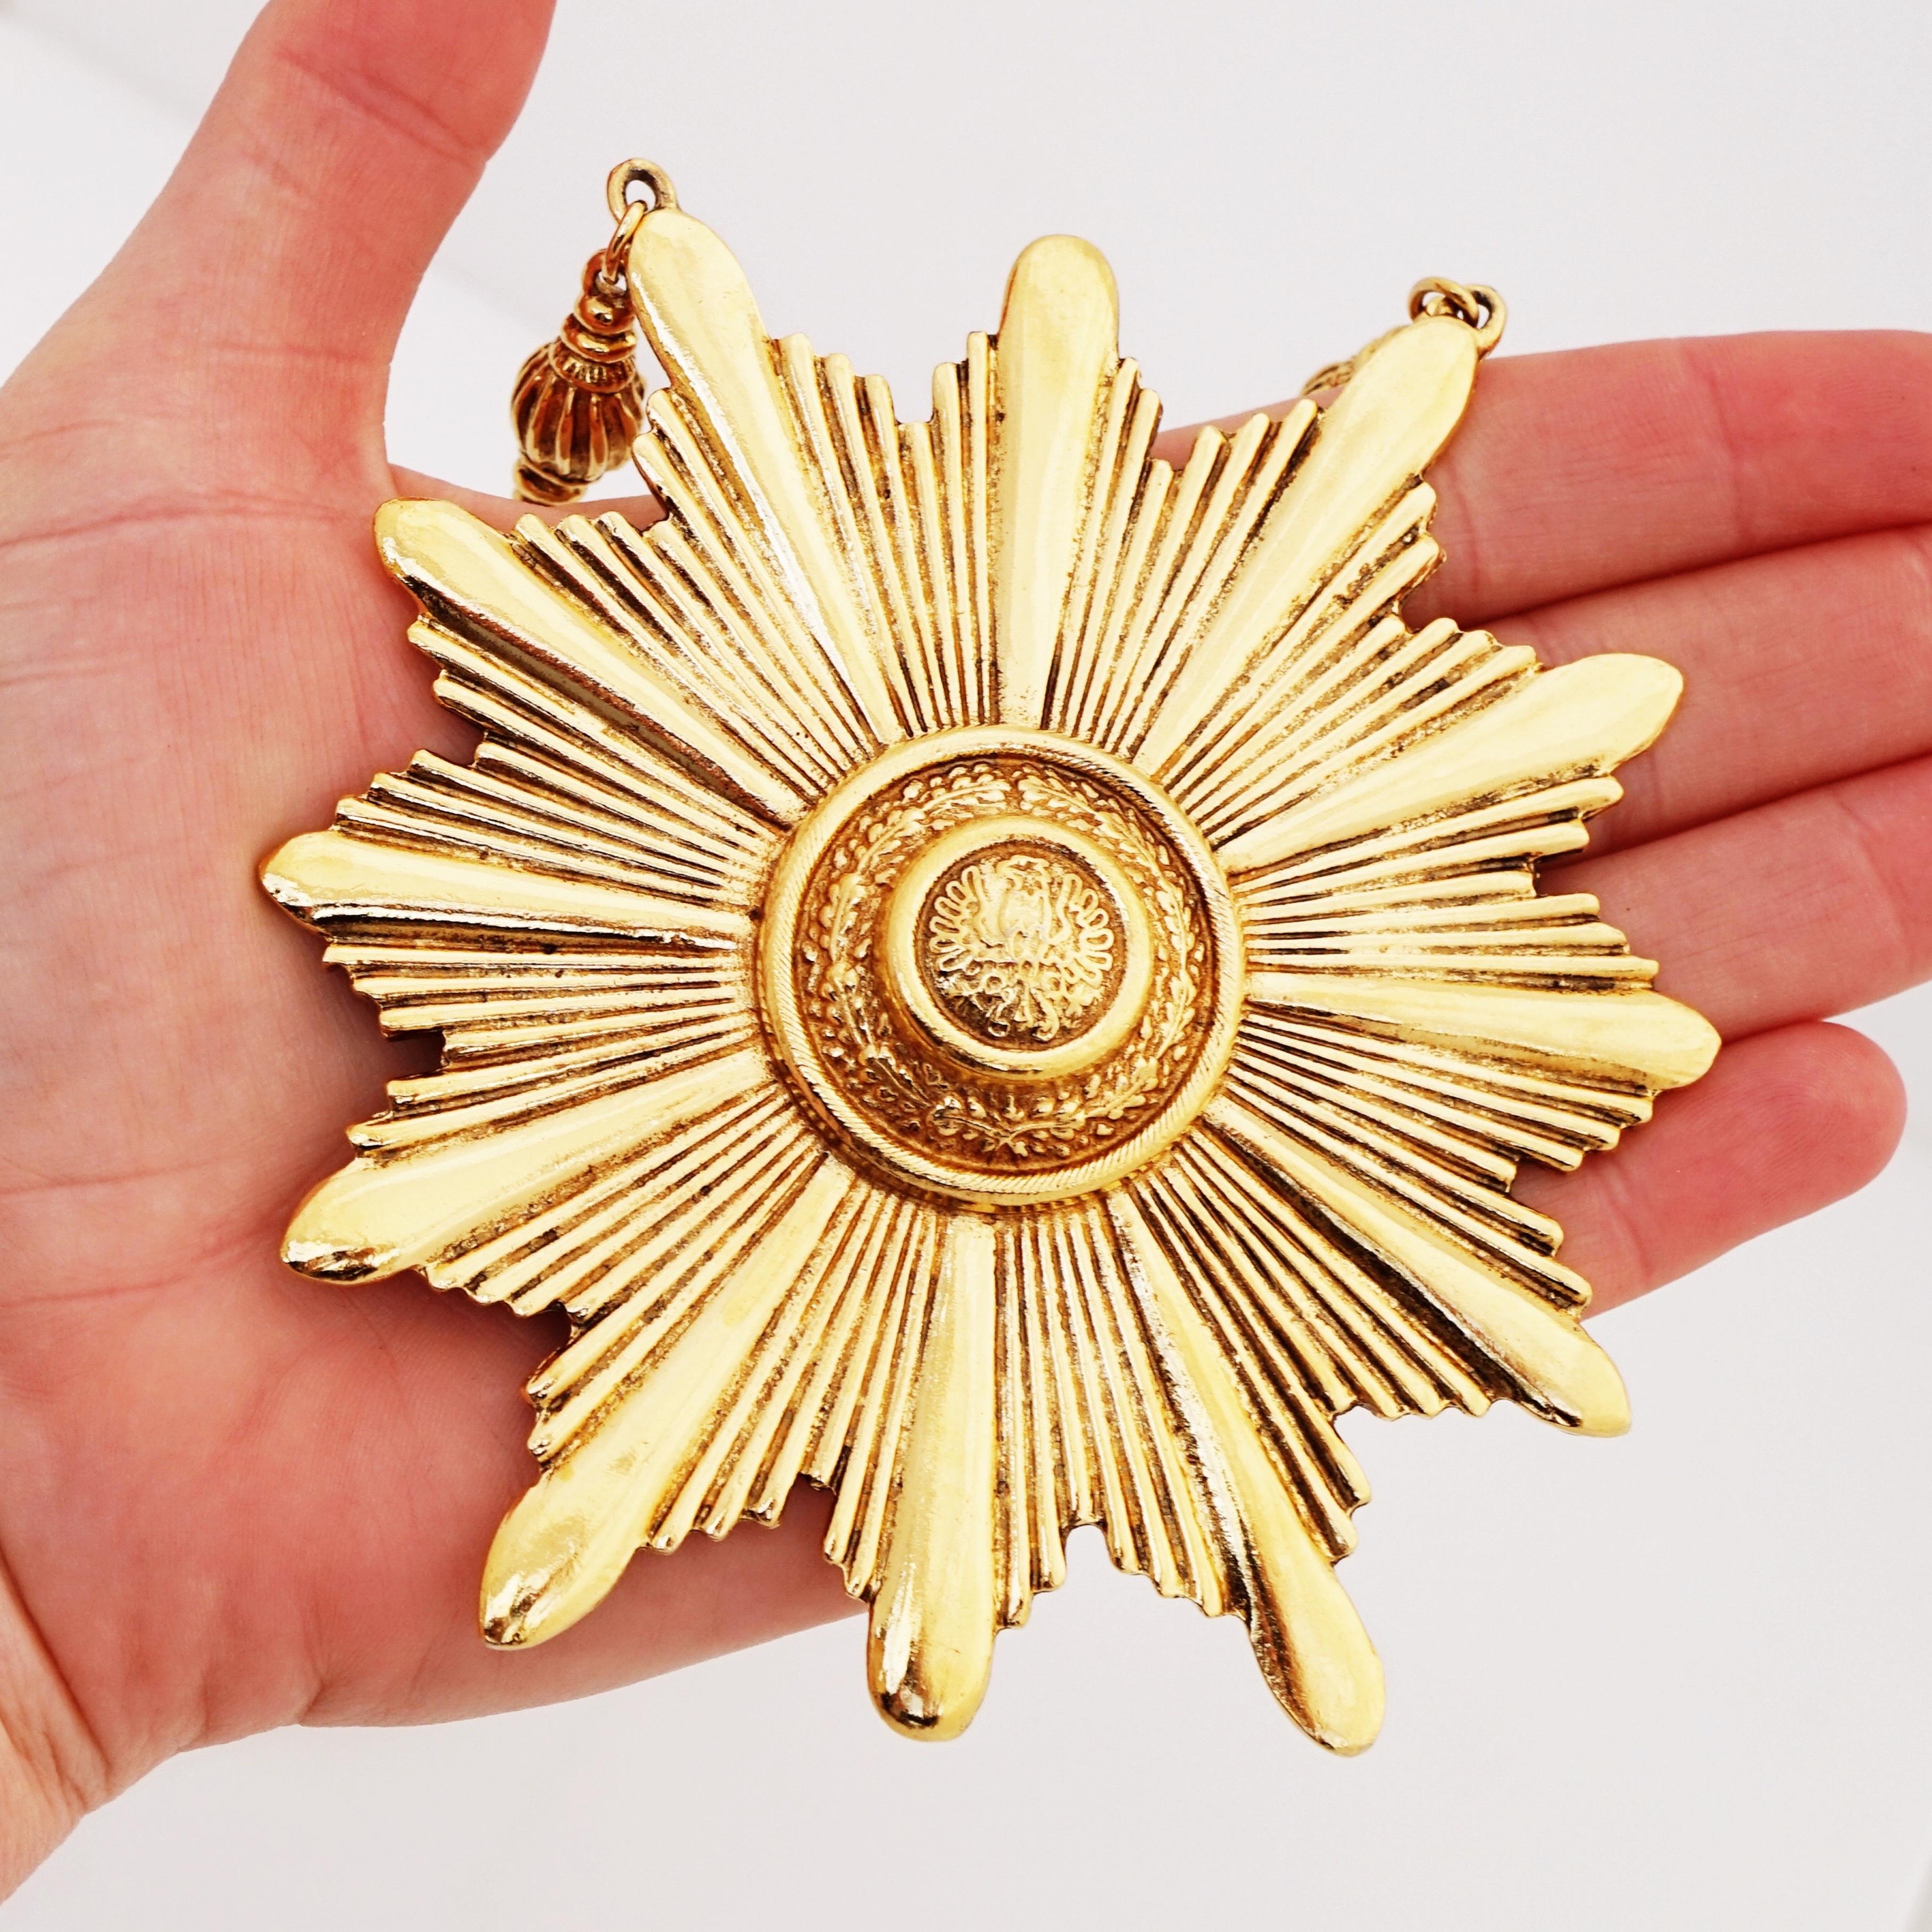 Massive Runway Gold Sunburst Pendant Necklace By Accessocraft, 1960s 1